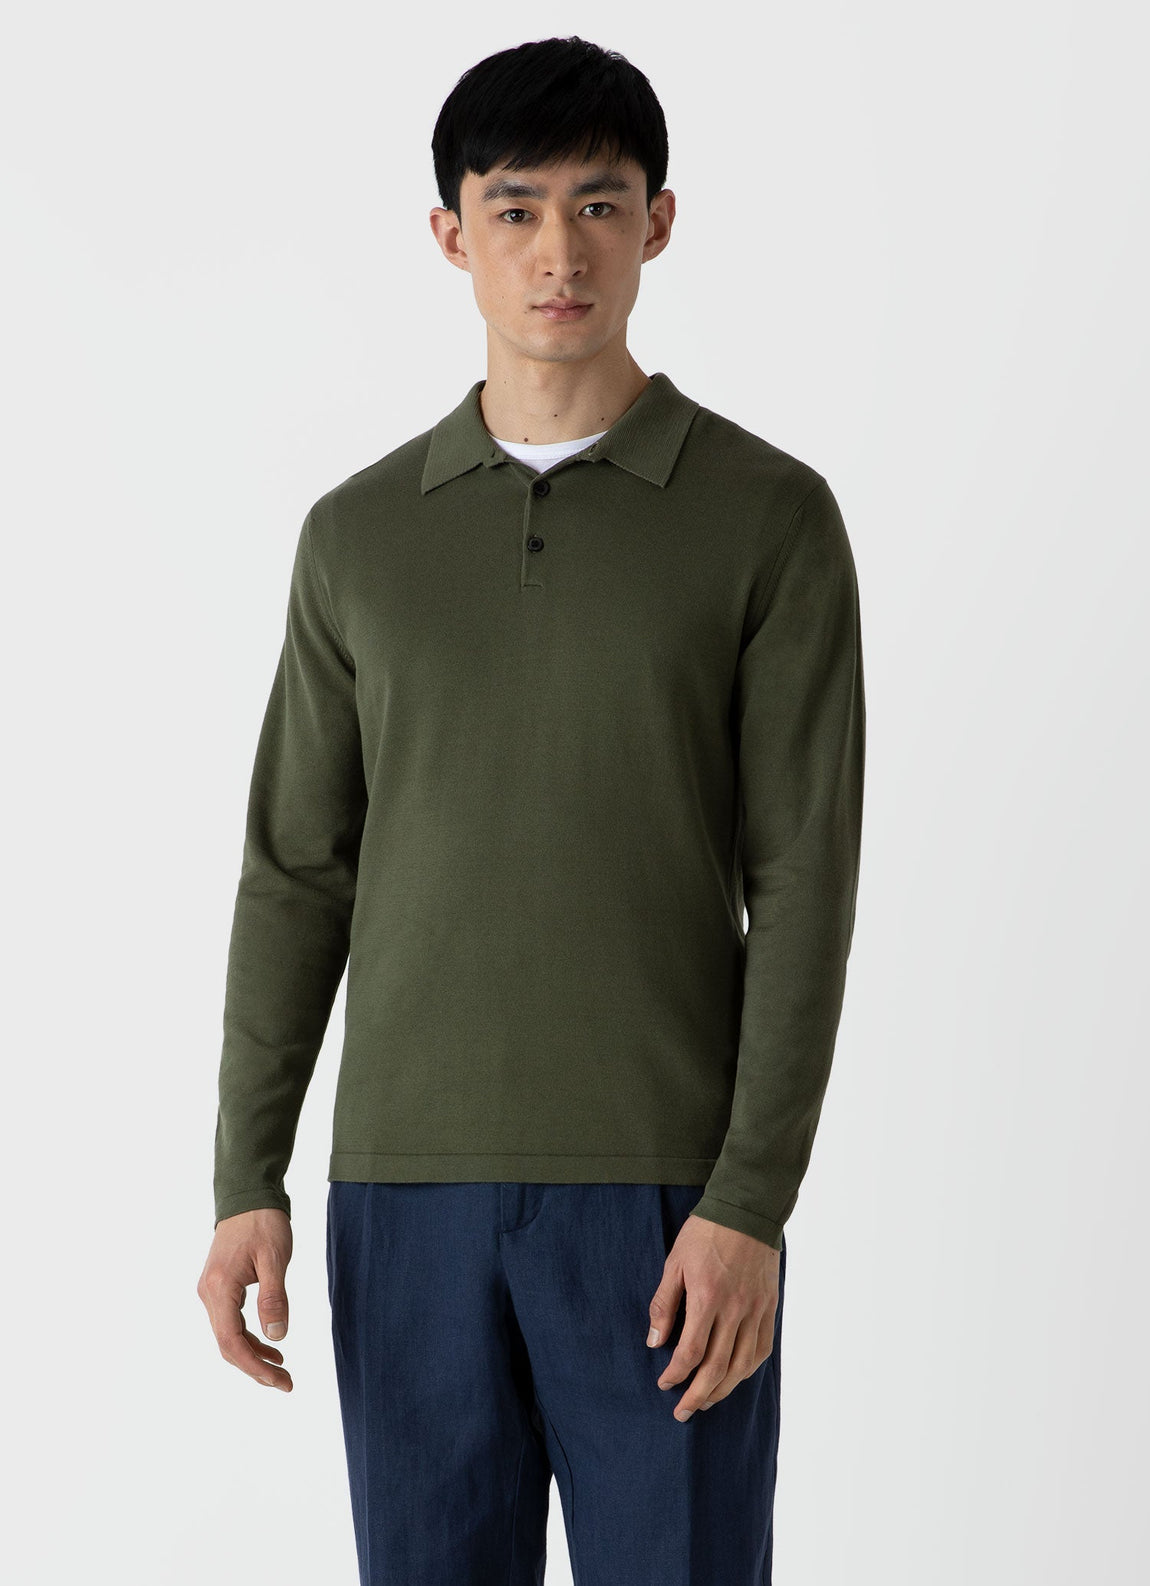 Men's Long Sleeve Sea Island Cotton Polo Shirt in Hunter Green